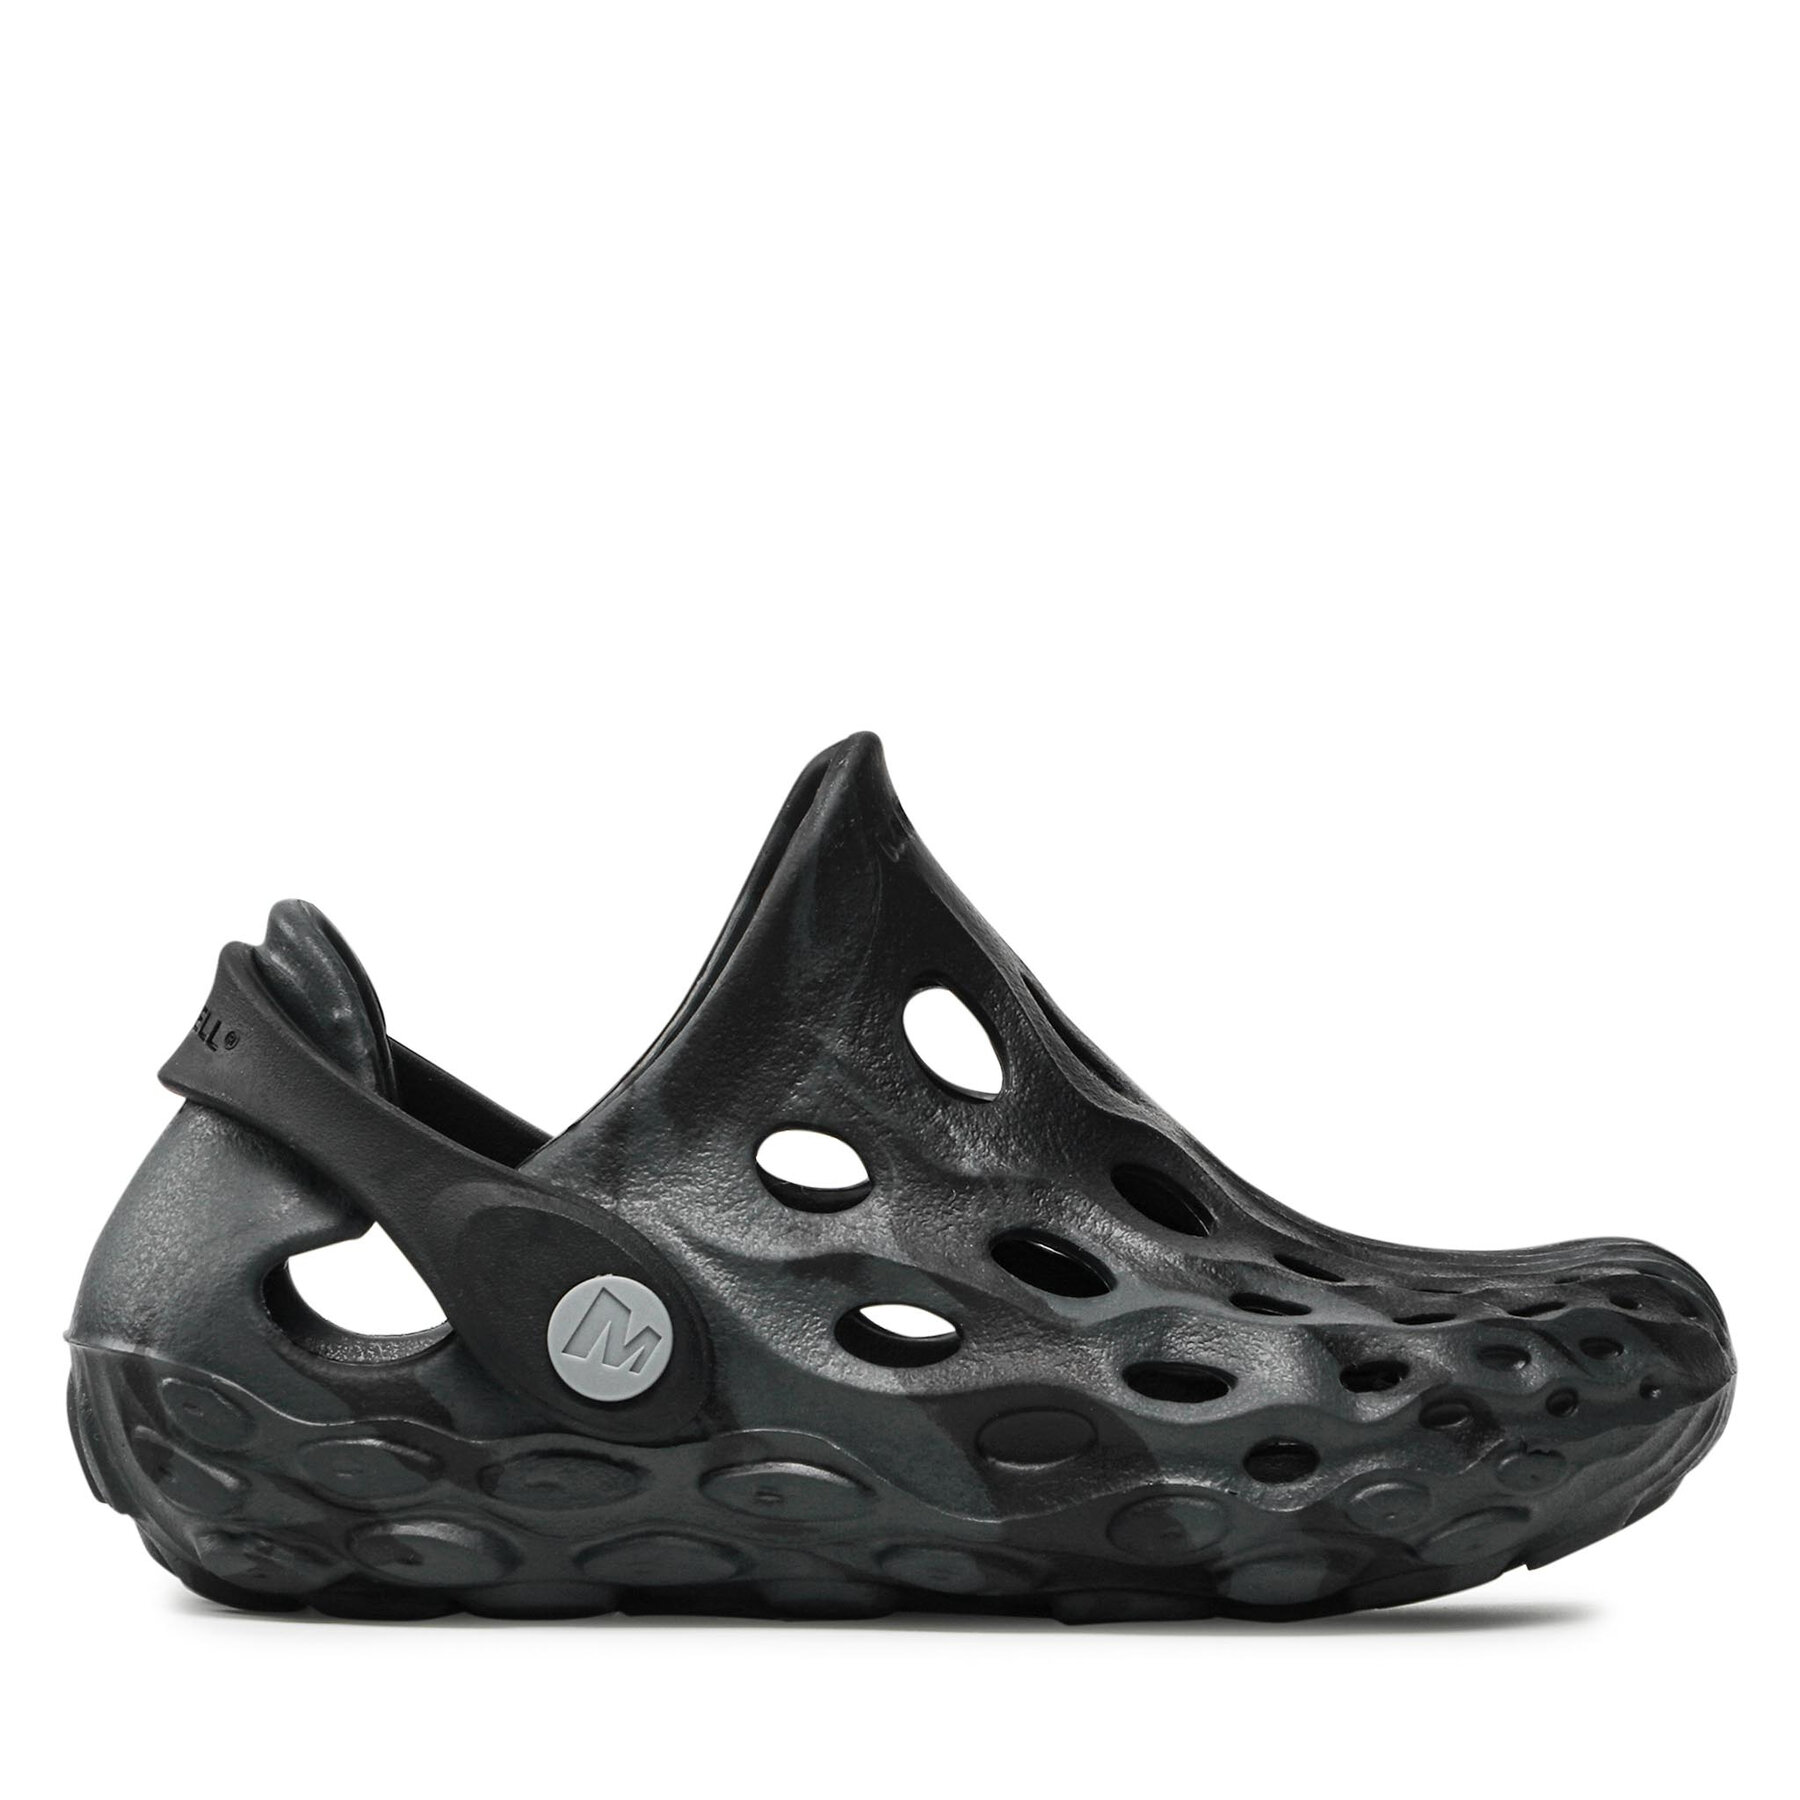 Chaussures pour sports aquatiques Merrell Hydro Moc MK265485 Noir